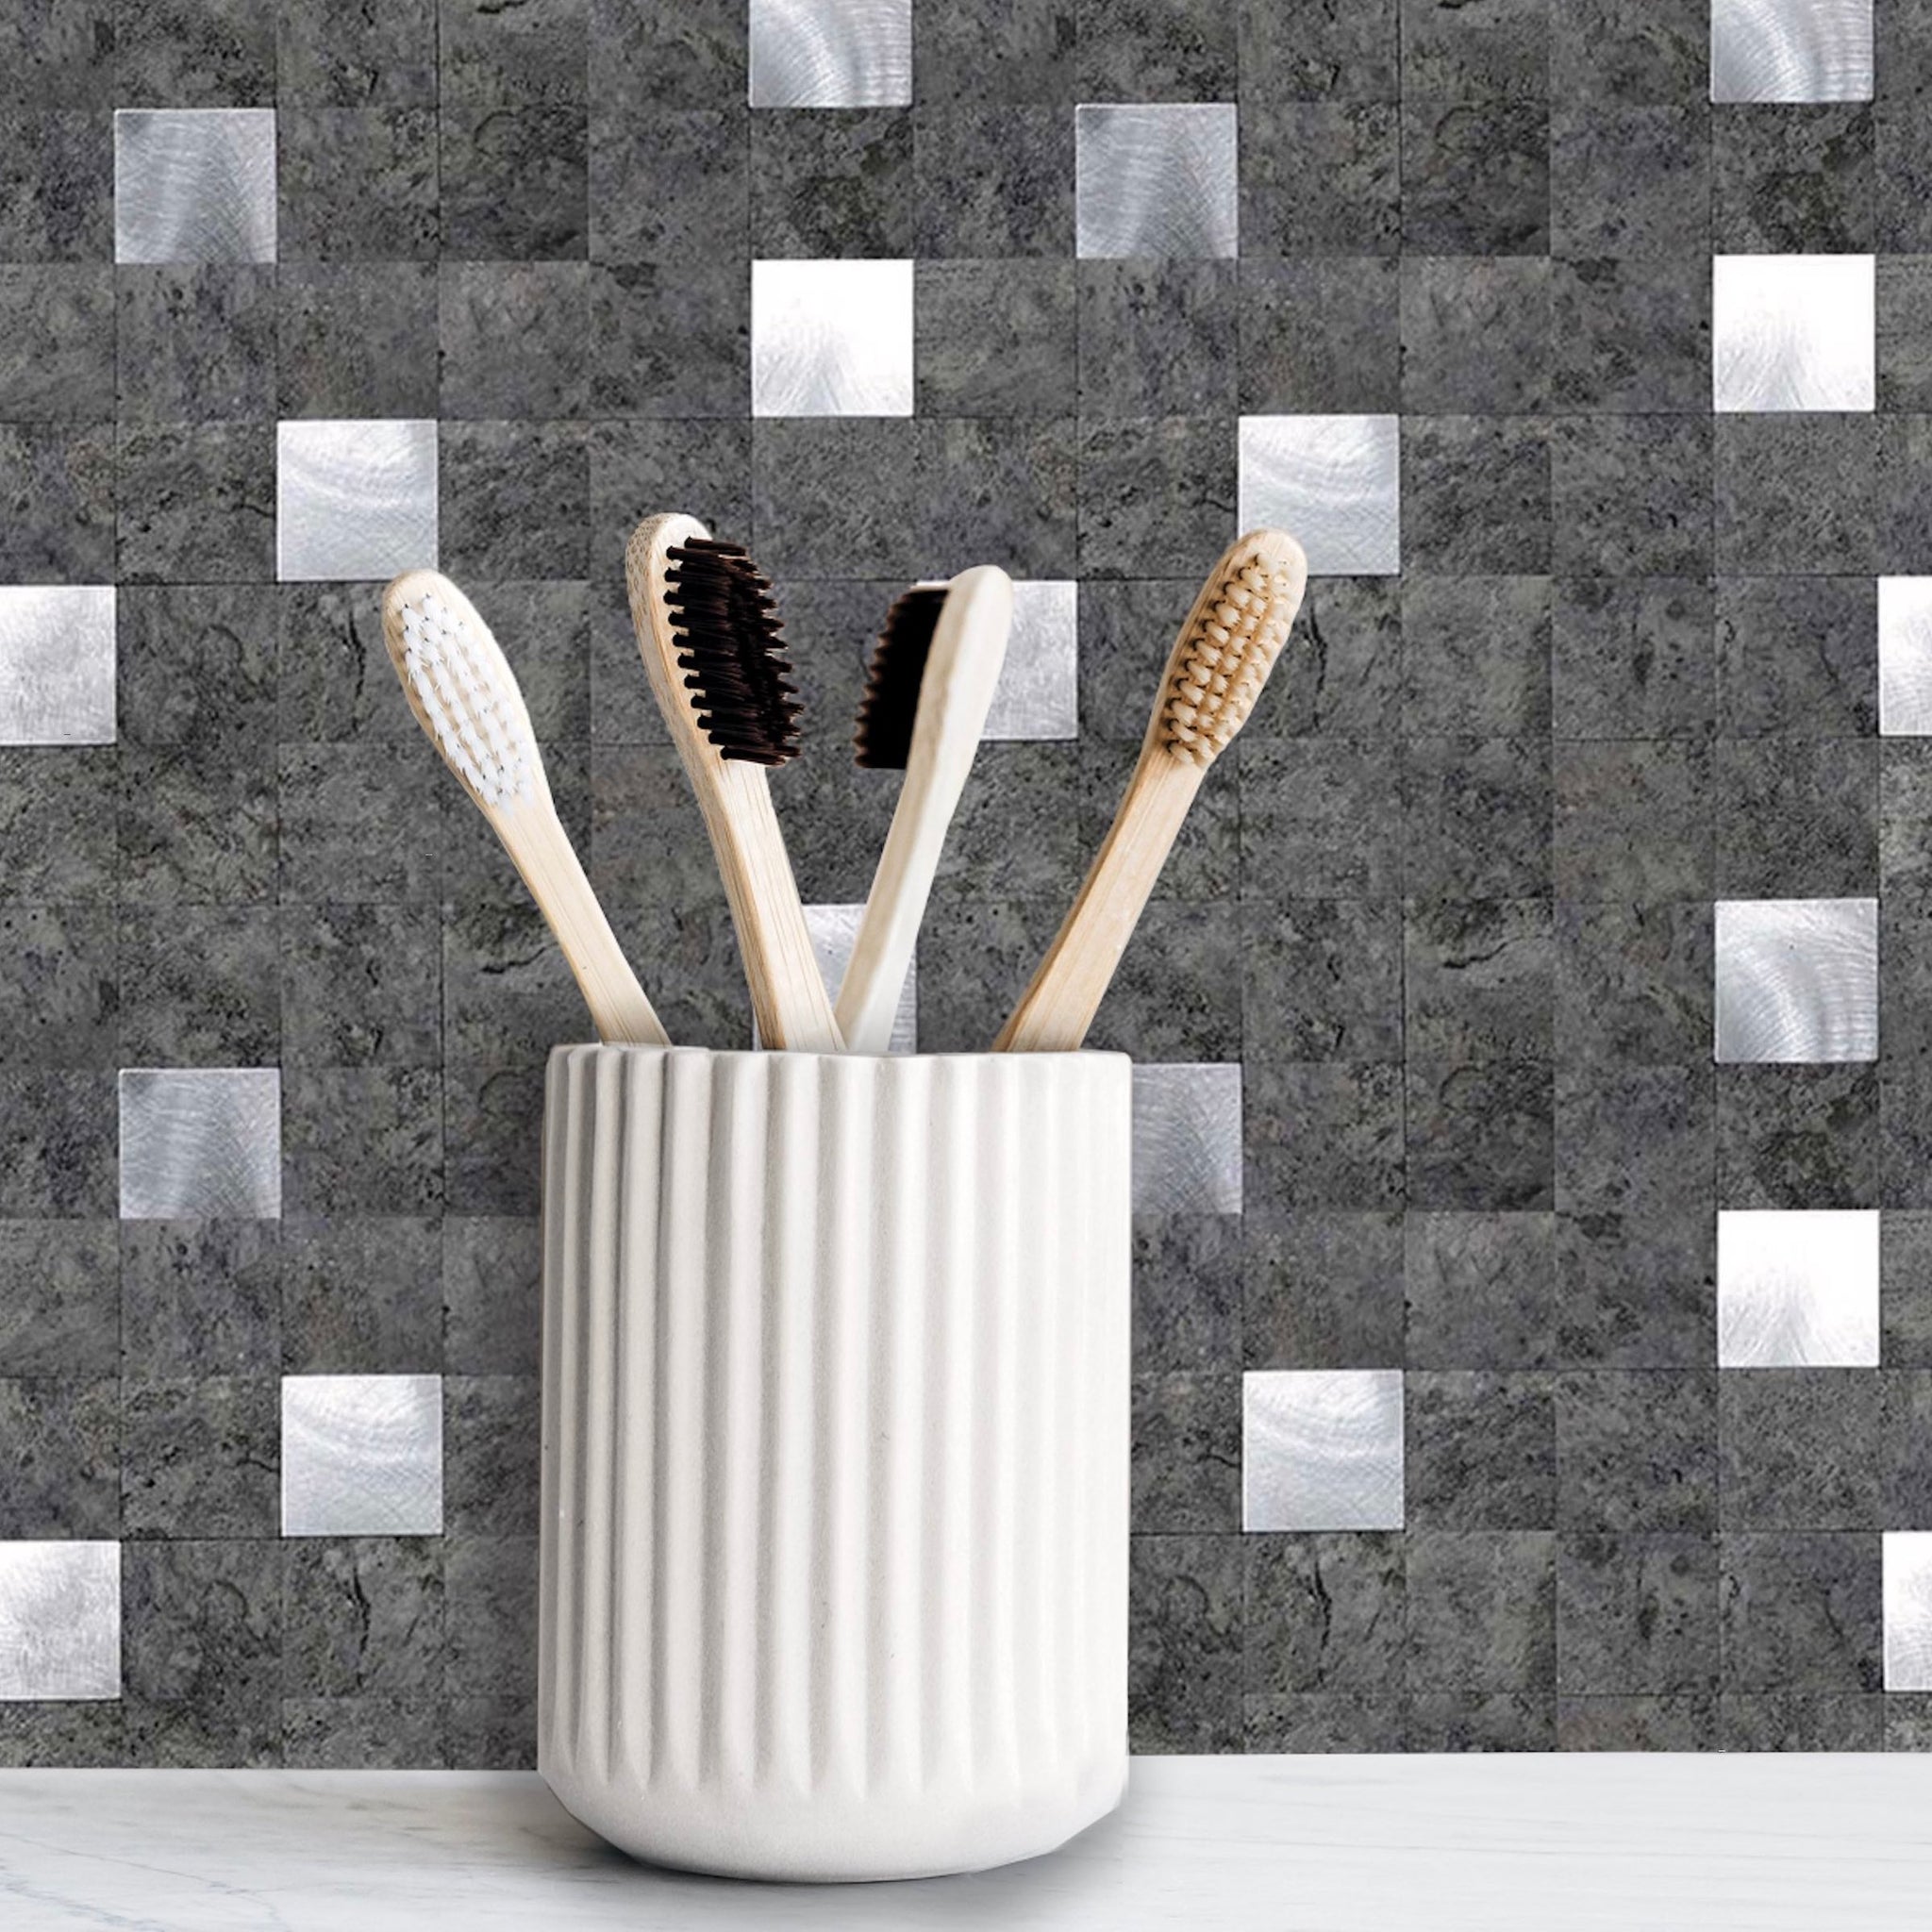 Design Is Personal Dip Peel and Stick Tile Backsplash 12-in x 12-in Ceramic